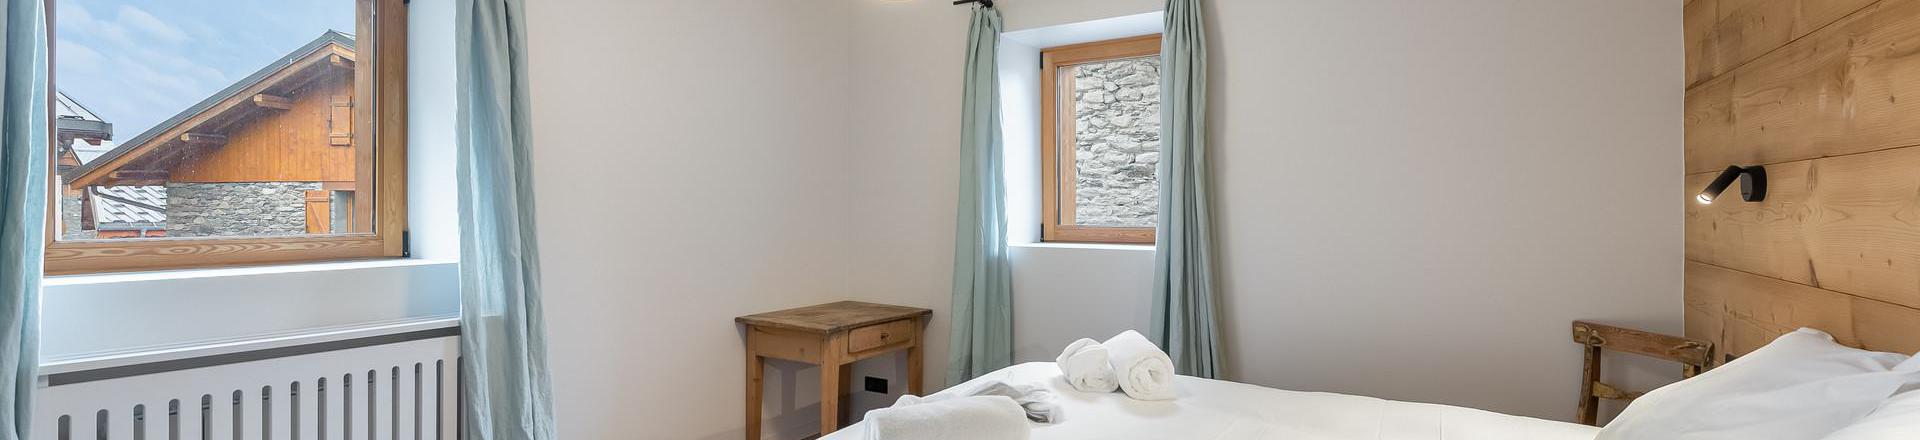 Rent in ski resort 6 room chalet 12 people - Chalet Blom - Les Menuires - Bedroom